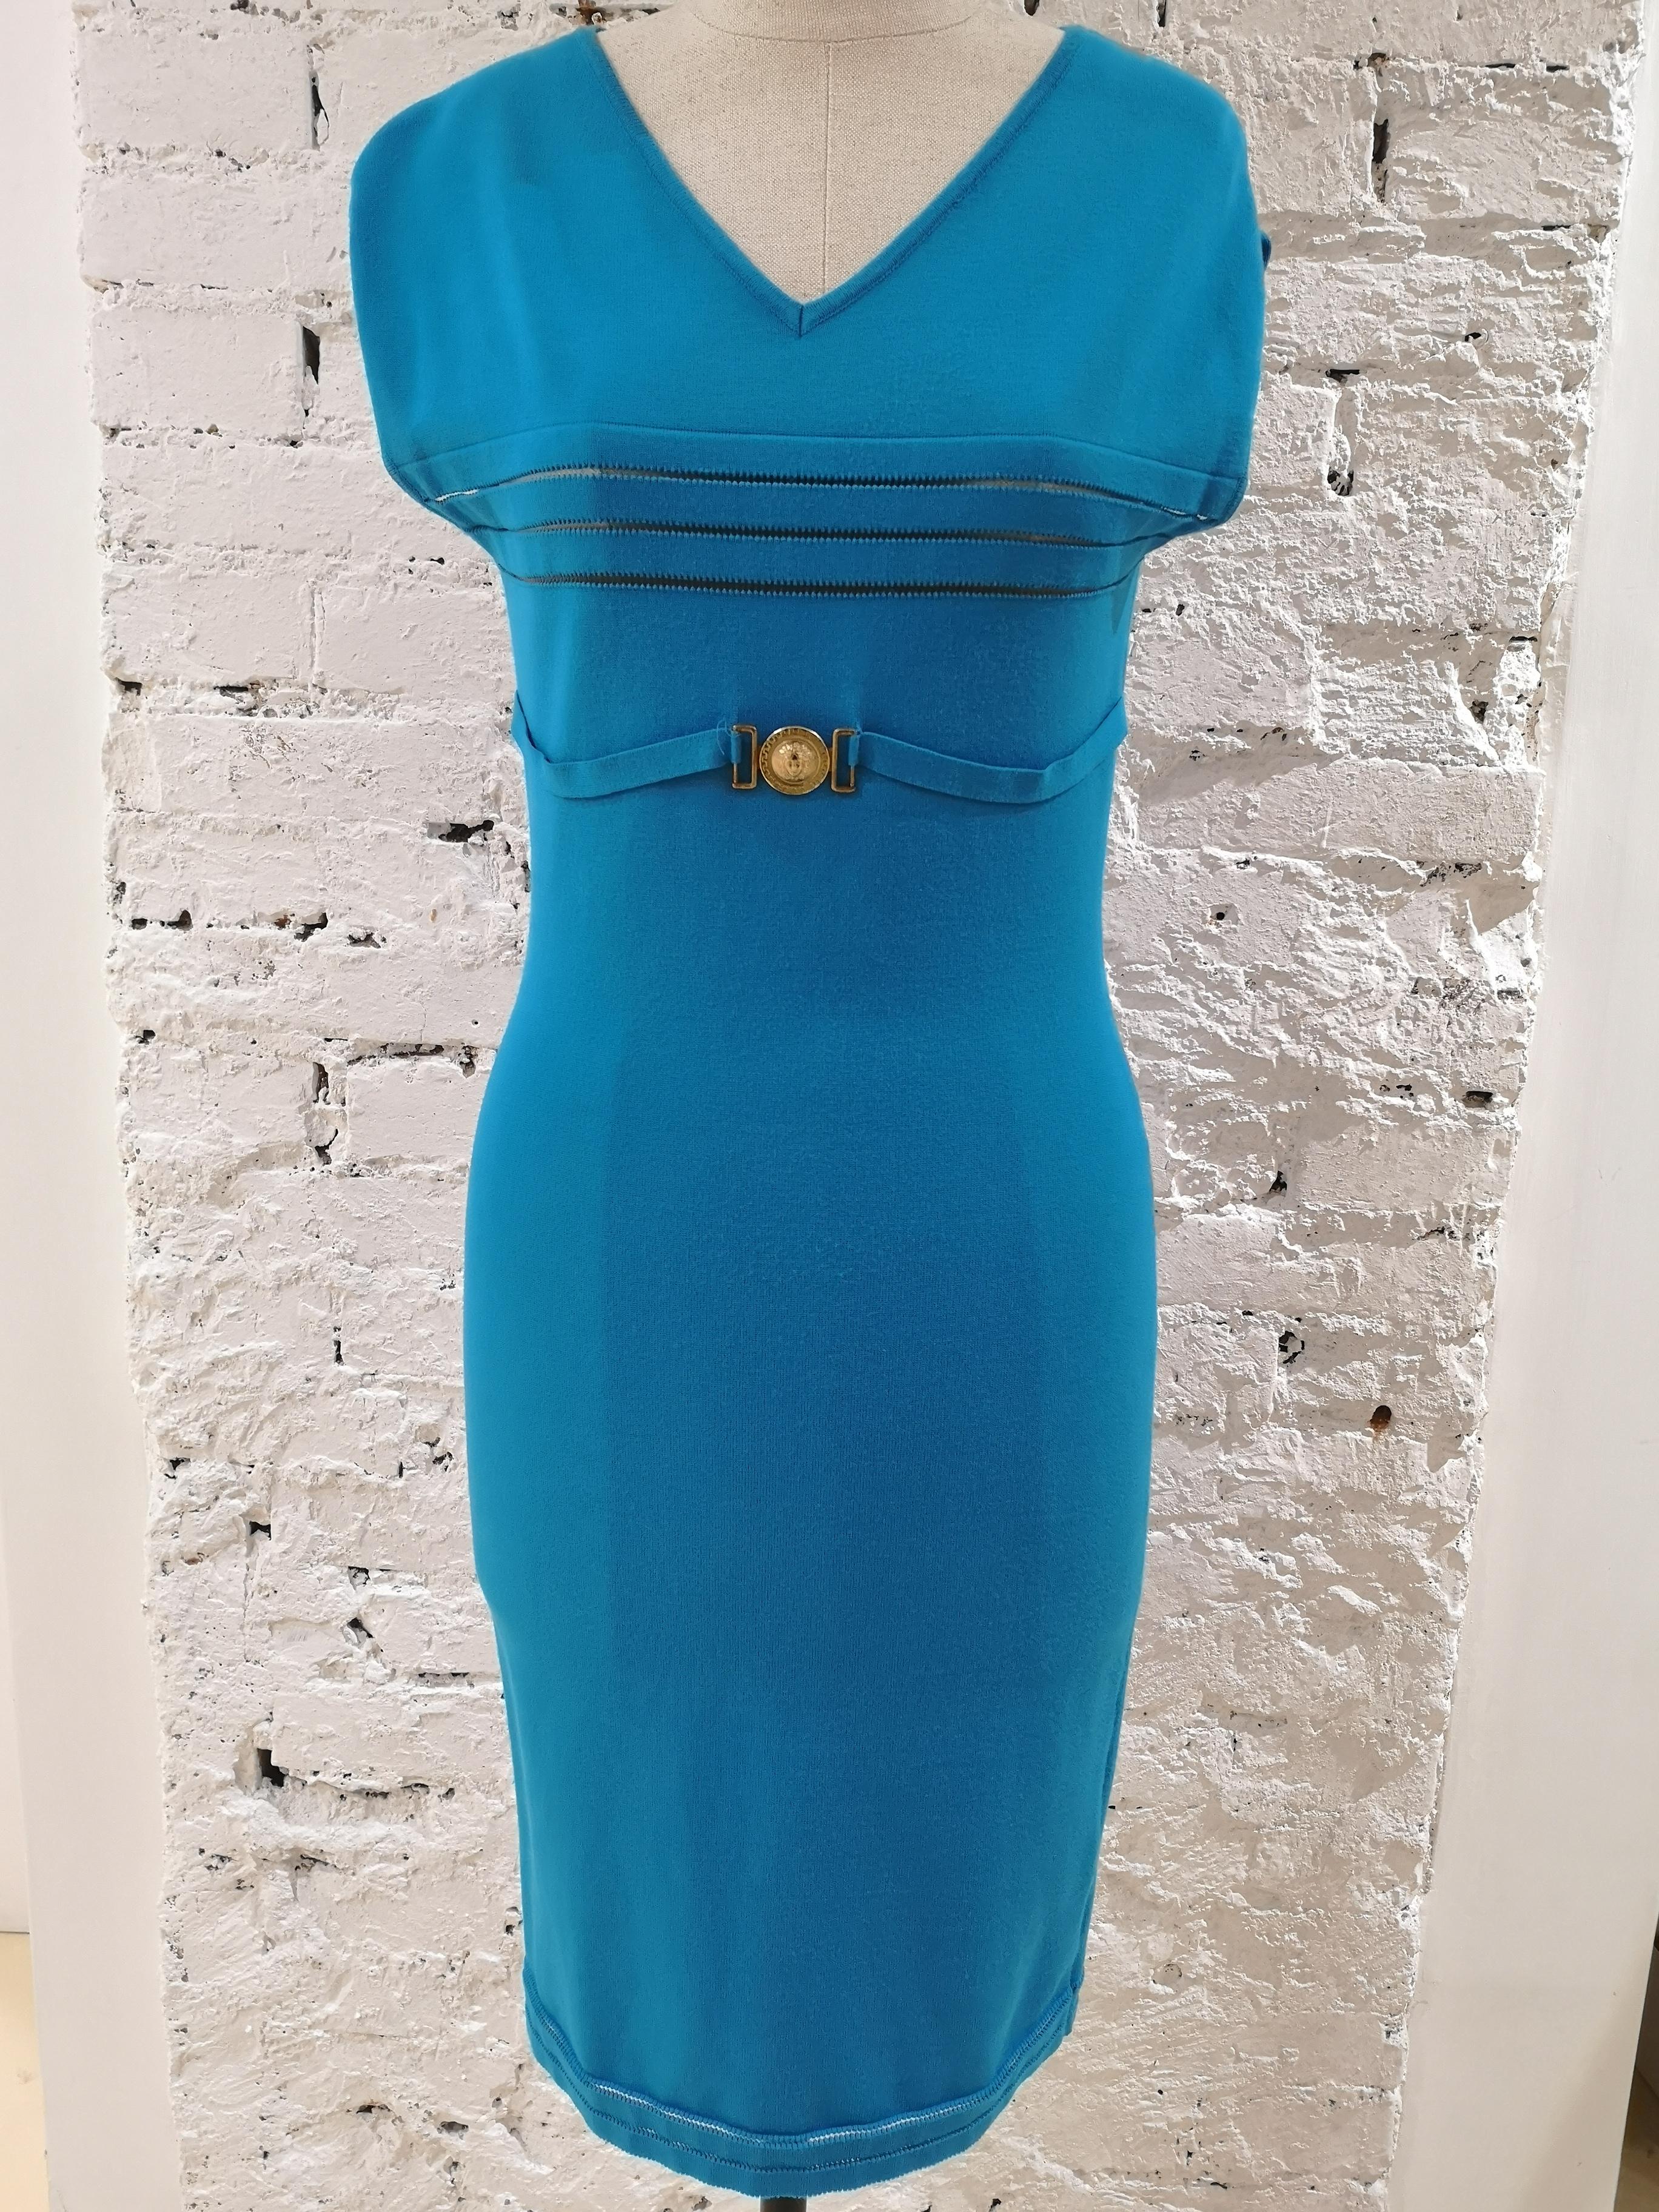 Versace Collecction Blue Dress NWOT 3